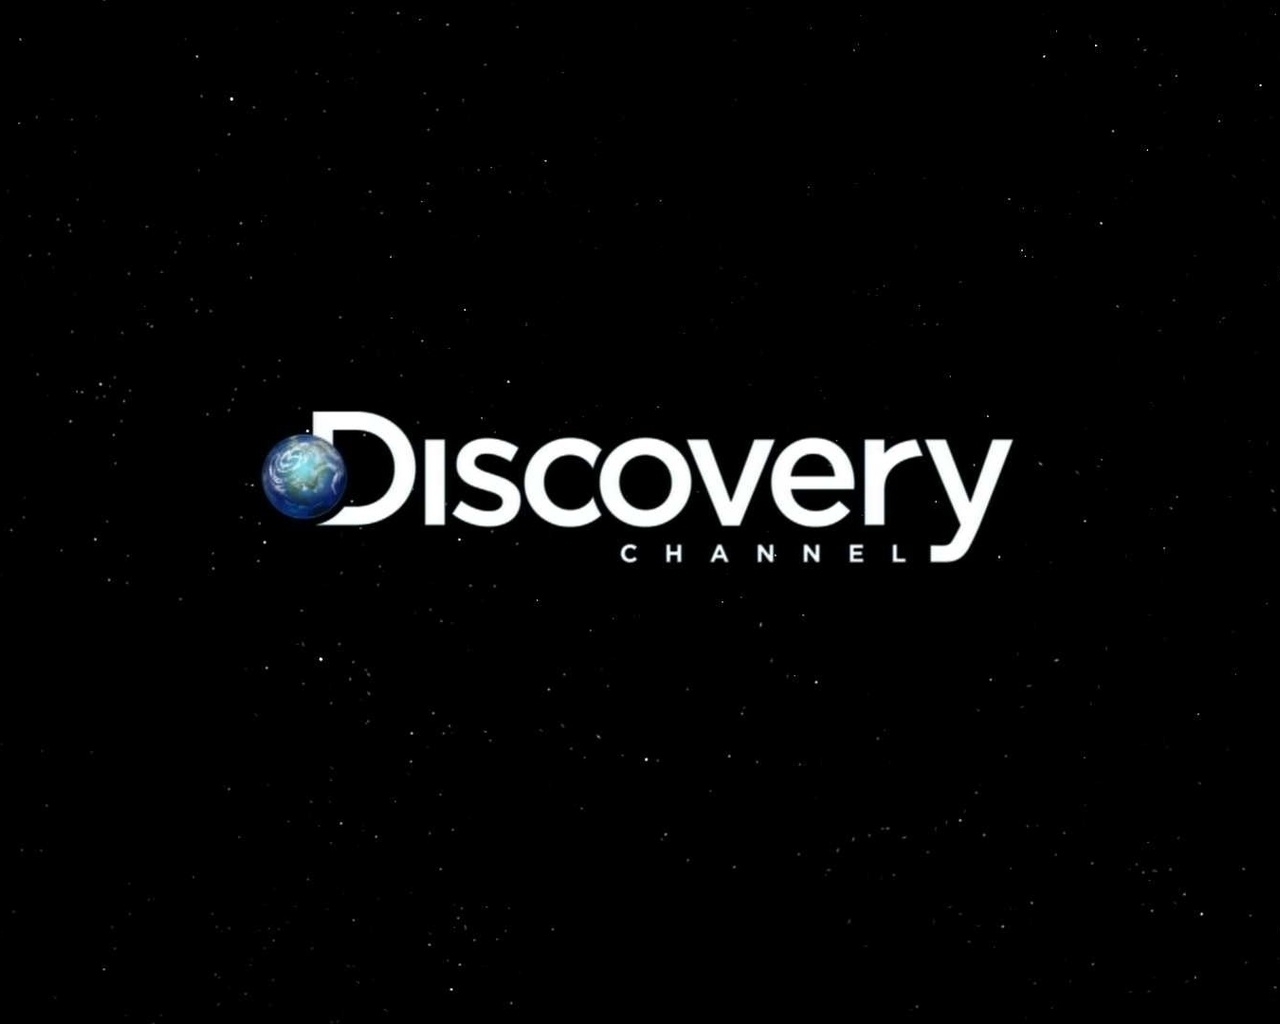 discovery channel, science channel, logo Wallpaper, HD Brands 4K